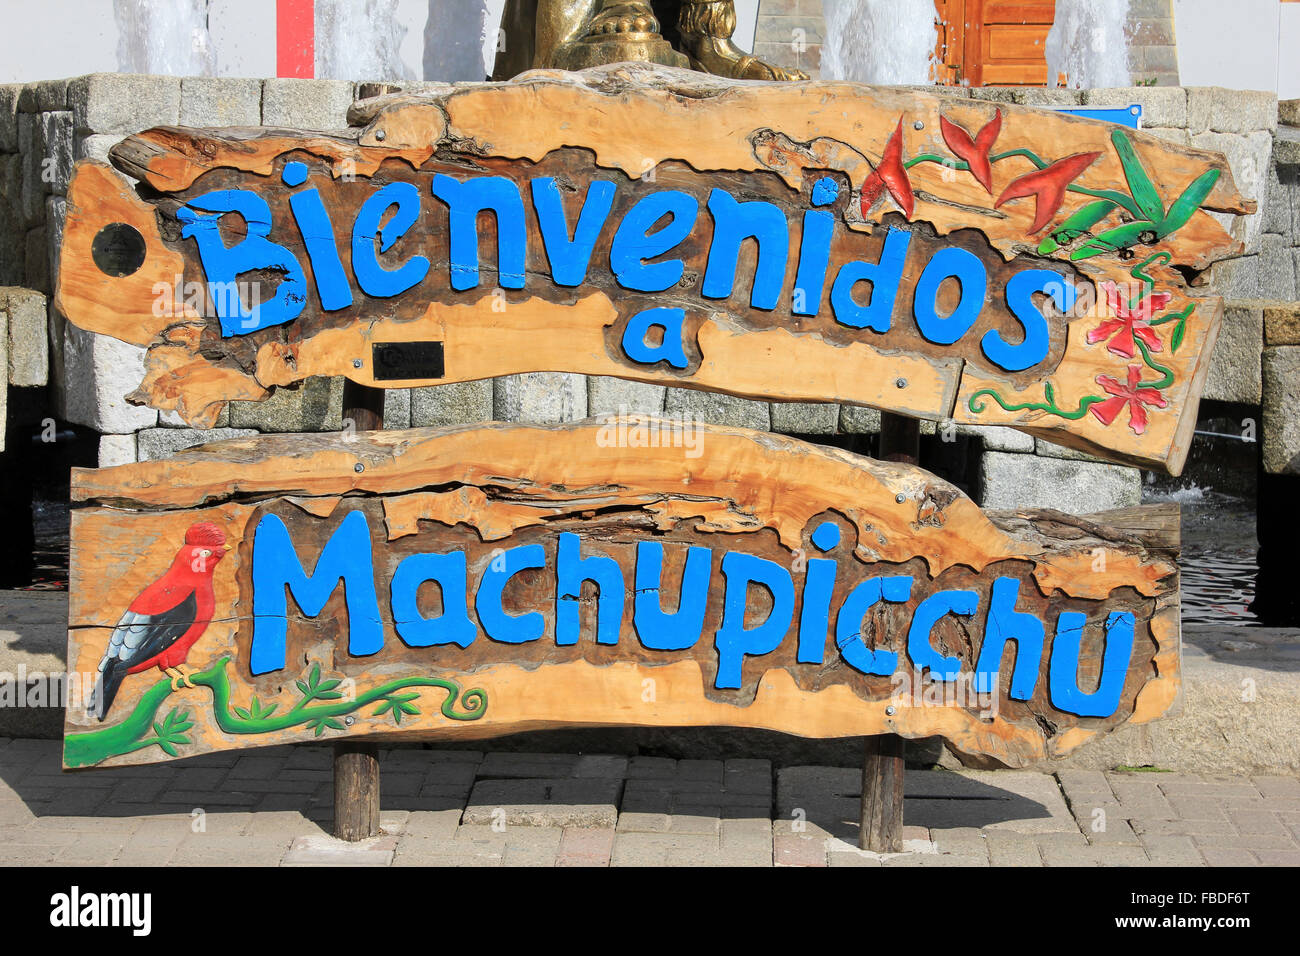 Bienvenidos a Machu Picchu - Welcome Sign Banque D'Images